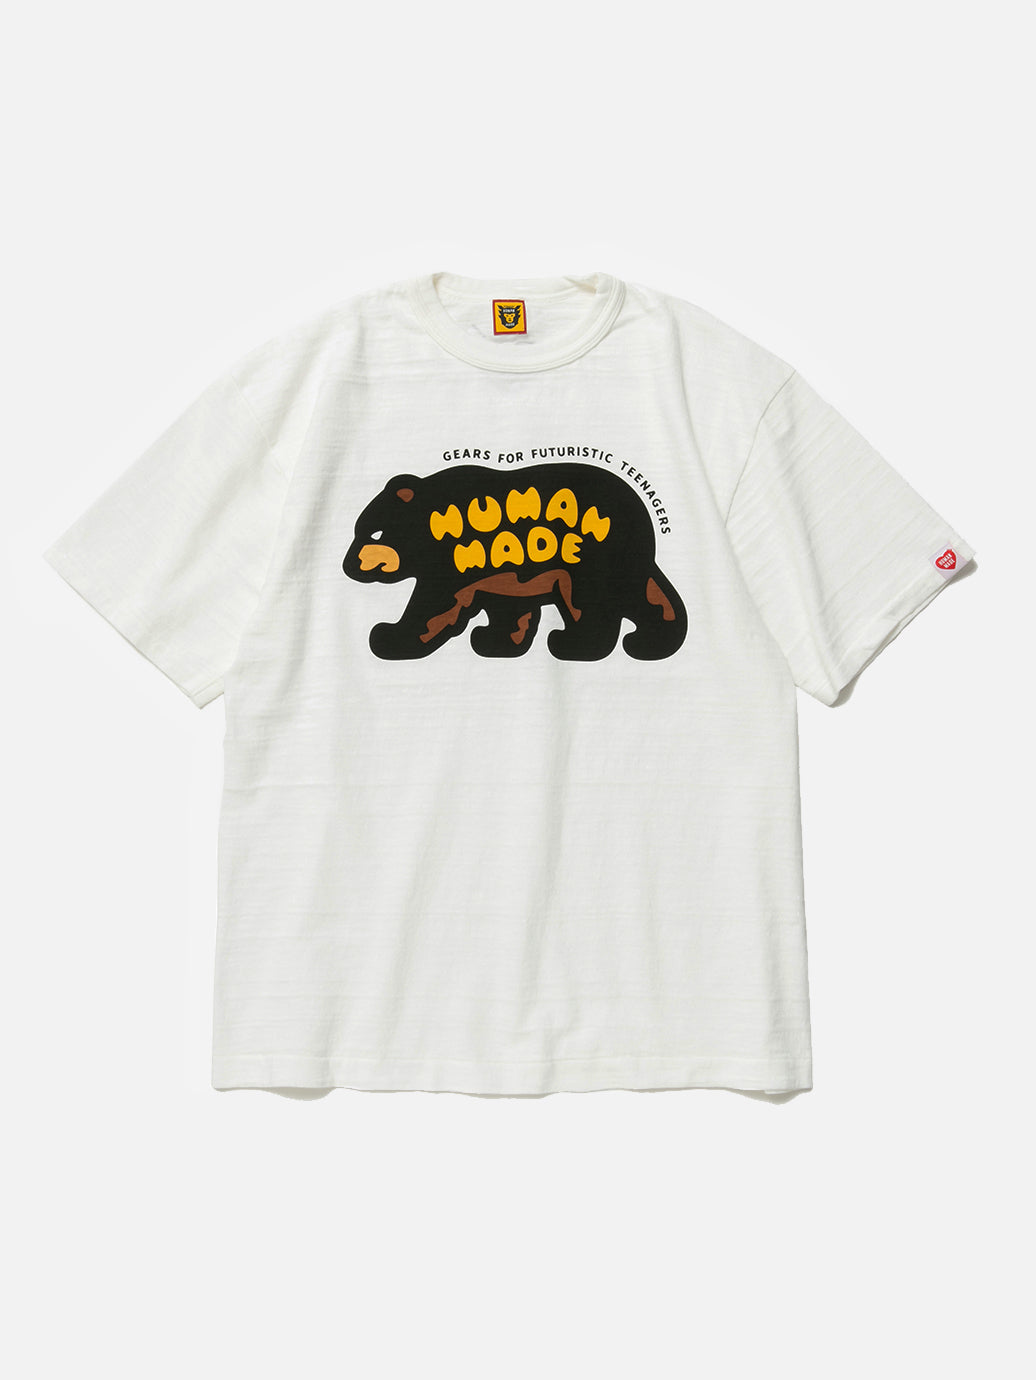 Human Made Graphic T-Shirt #10